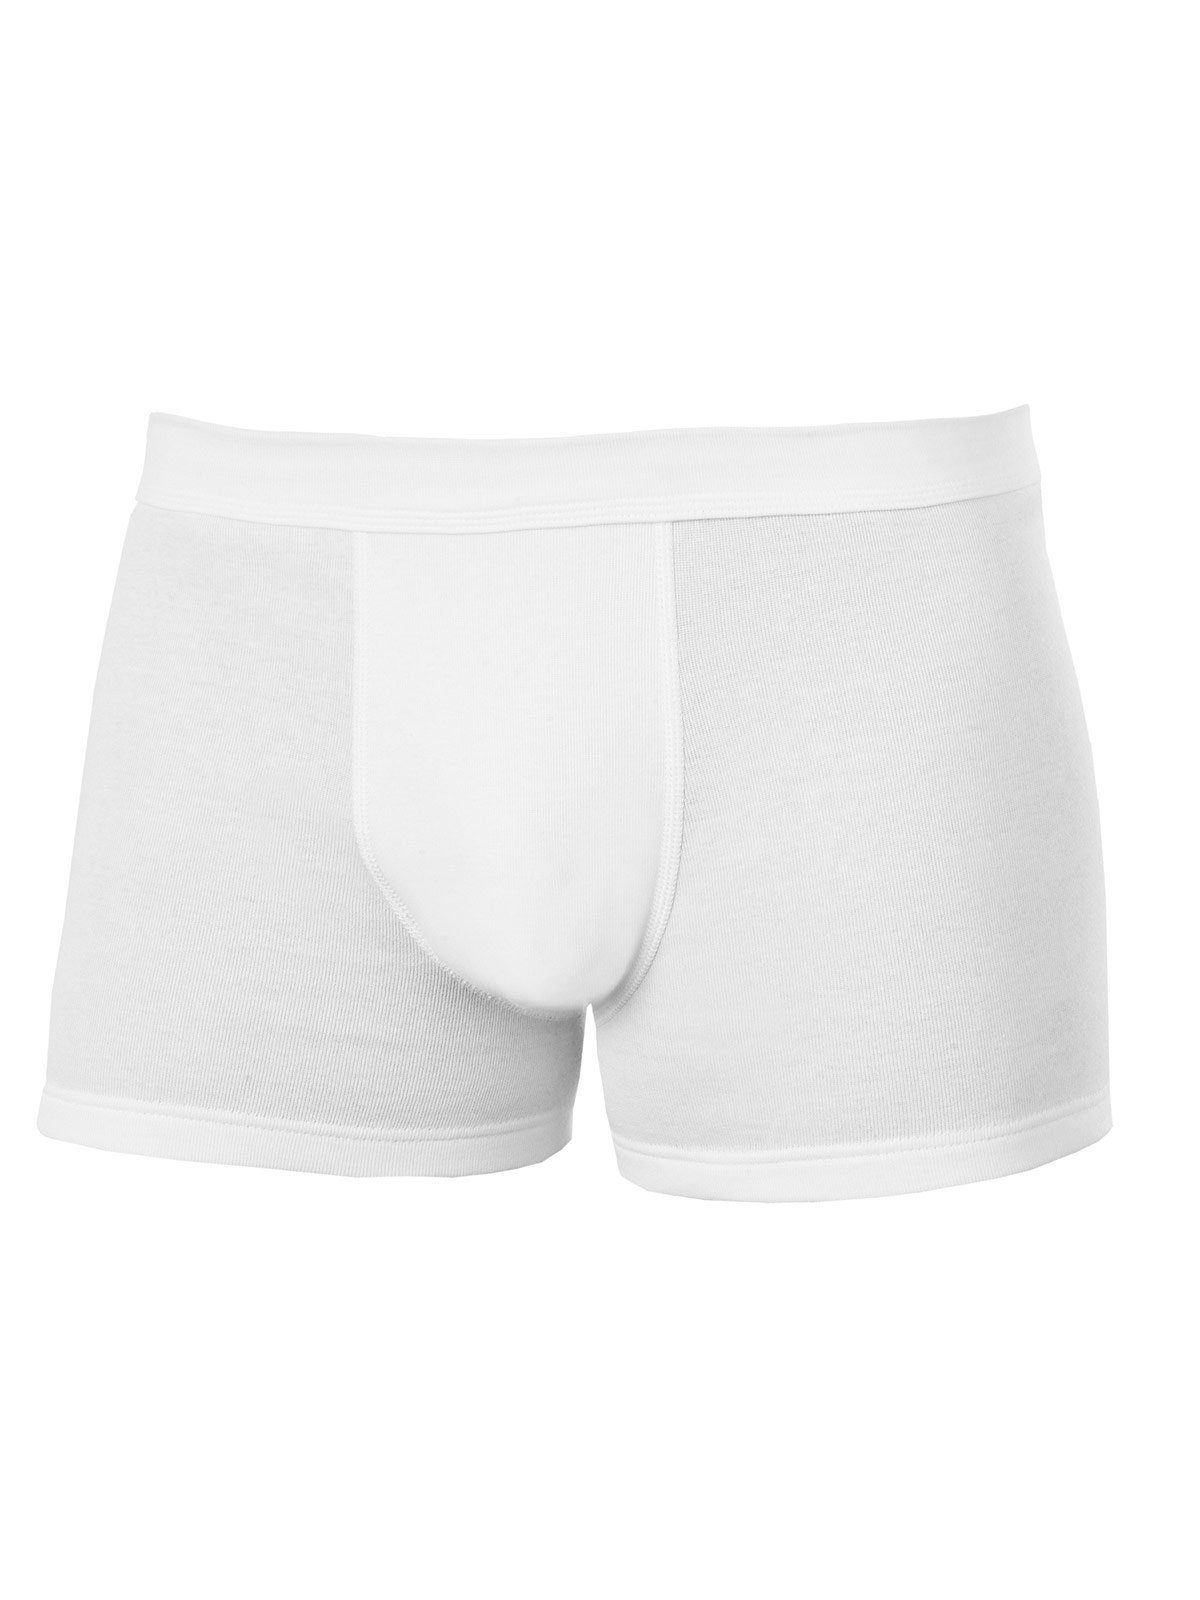 Pants Herren Bio Pants Cotton Pack (Packung, 2er KUMPF - 2-St) Retro